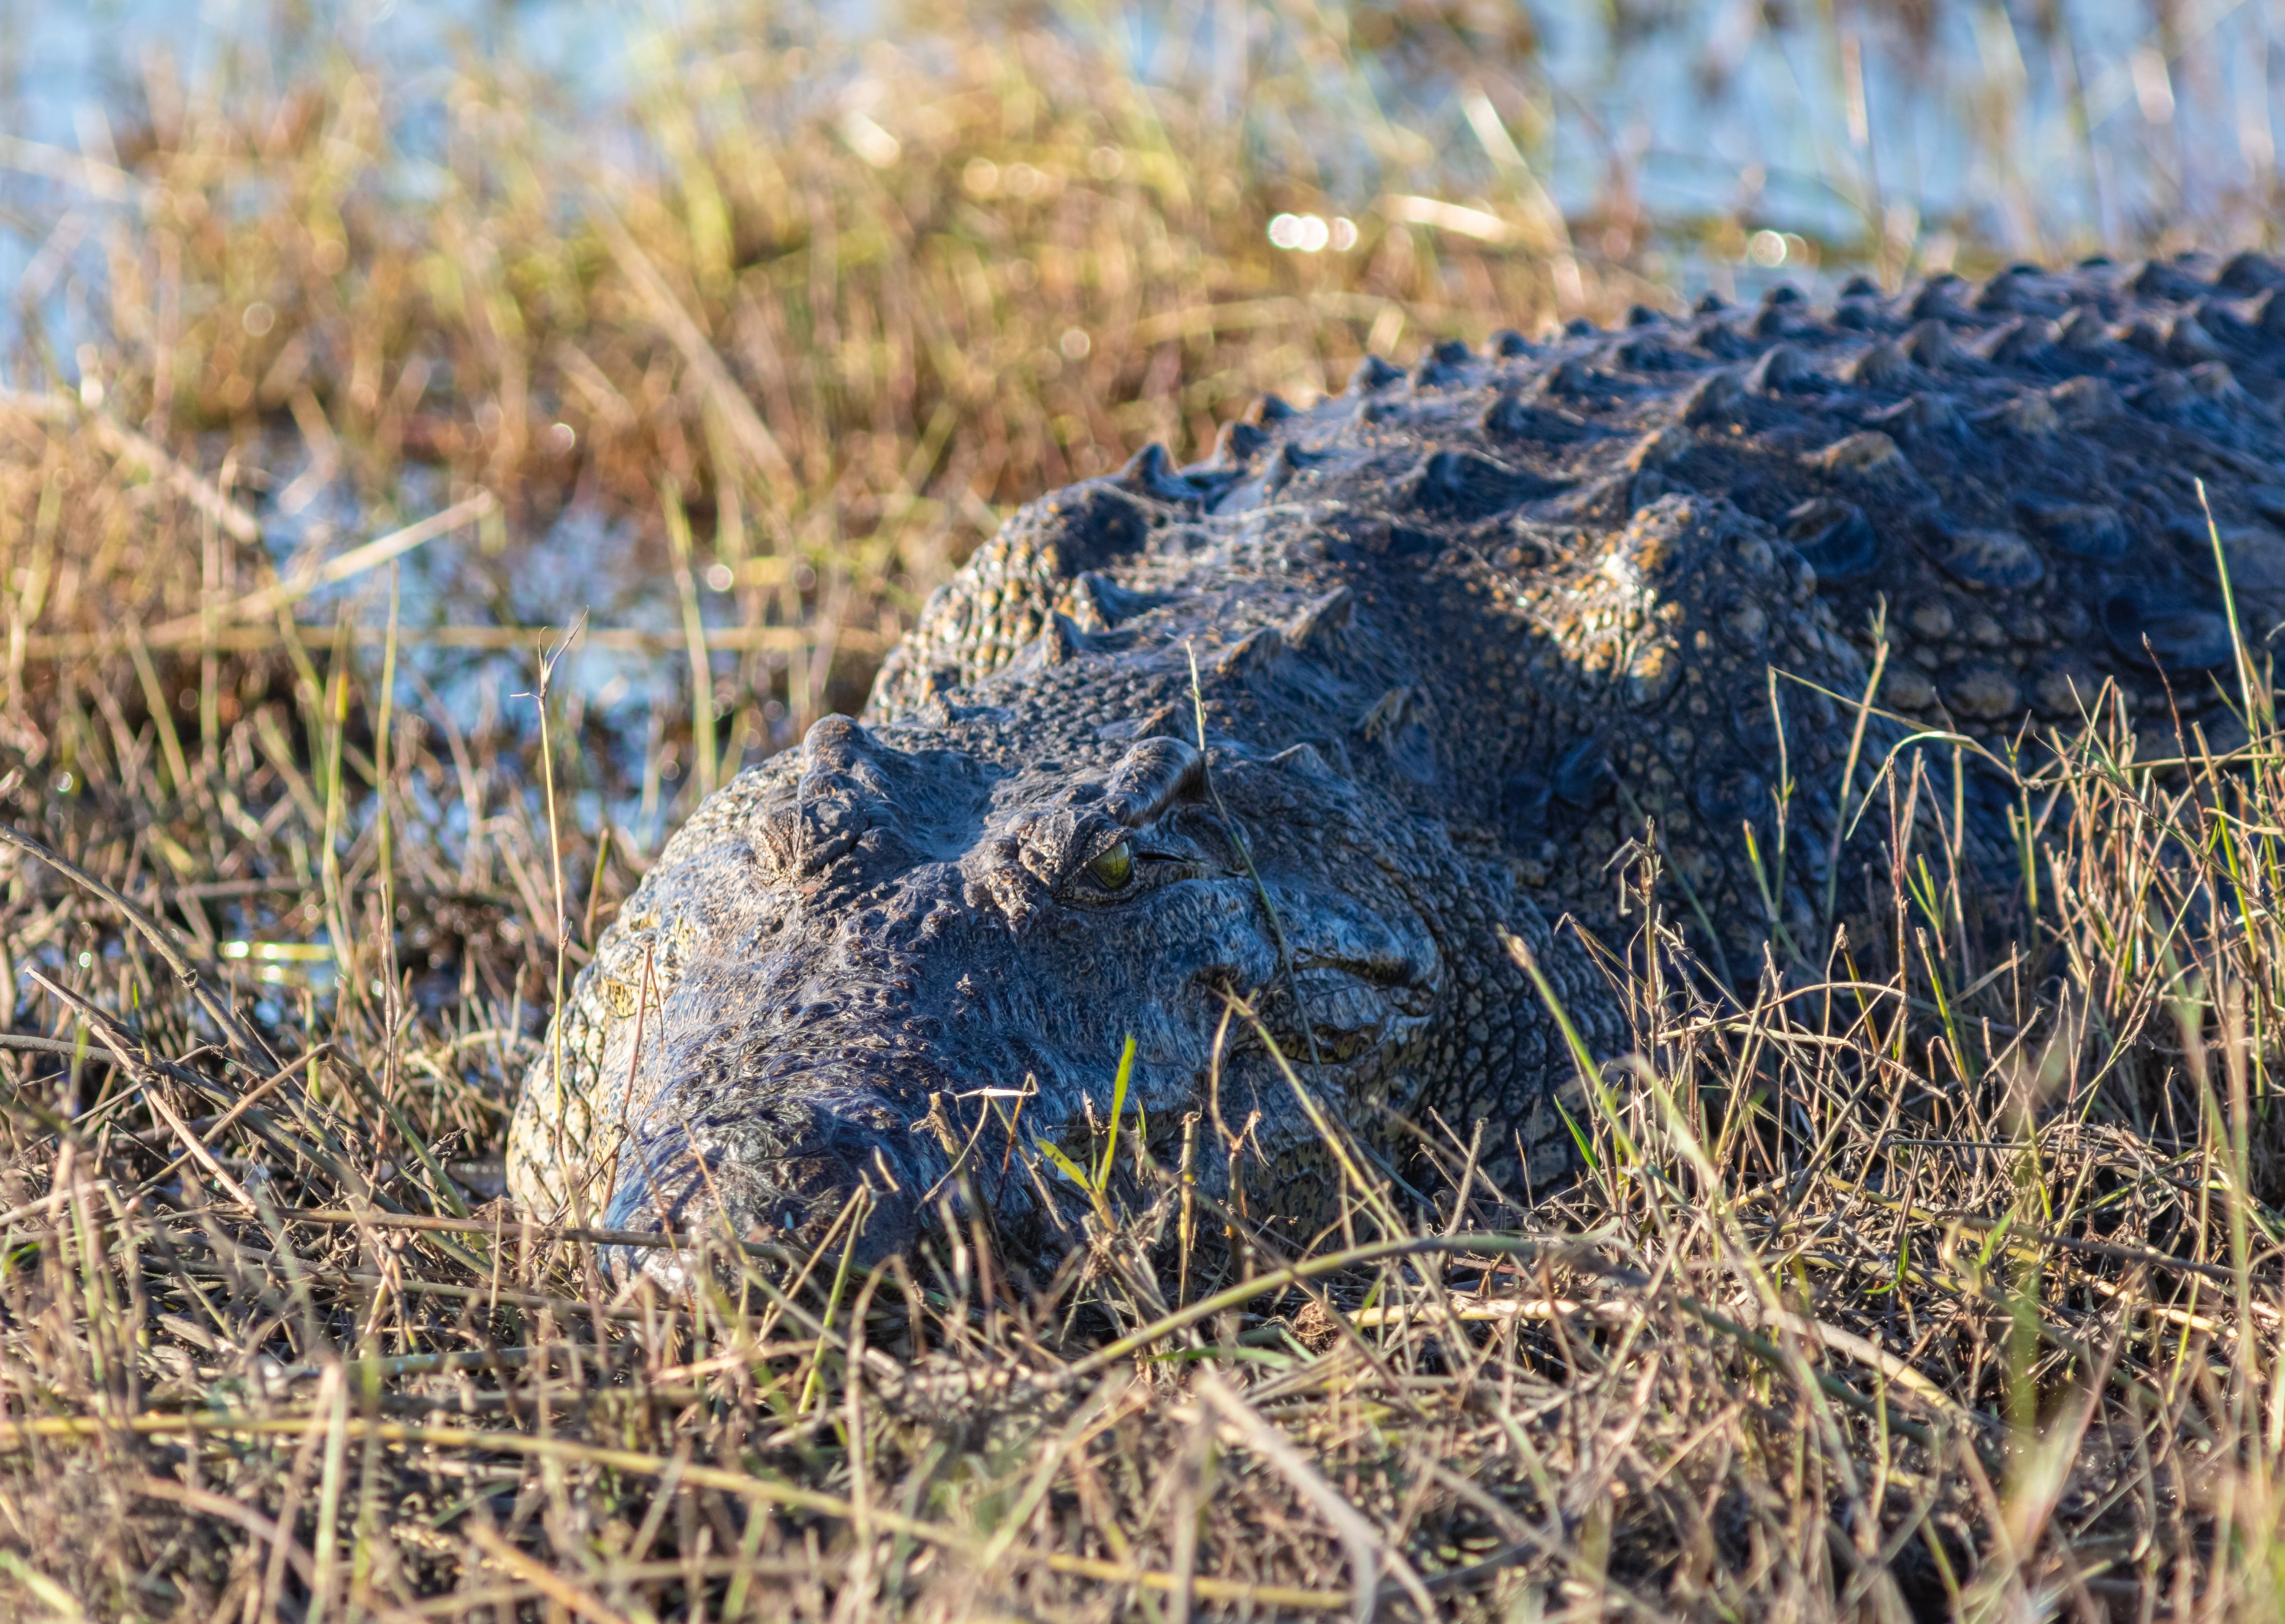 Cocodrilo del Nilo (Crocodylus niloticus), parque nacional de Chobe, Botsuana, 2018-07-28, DD 71